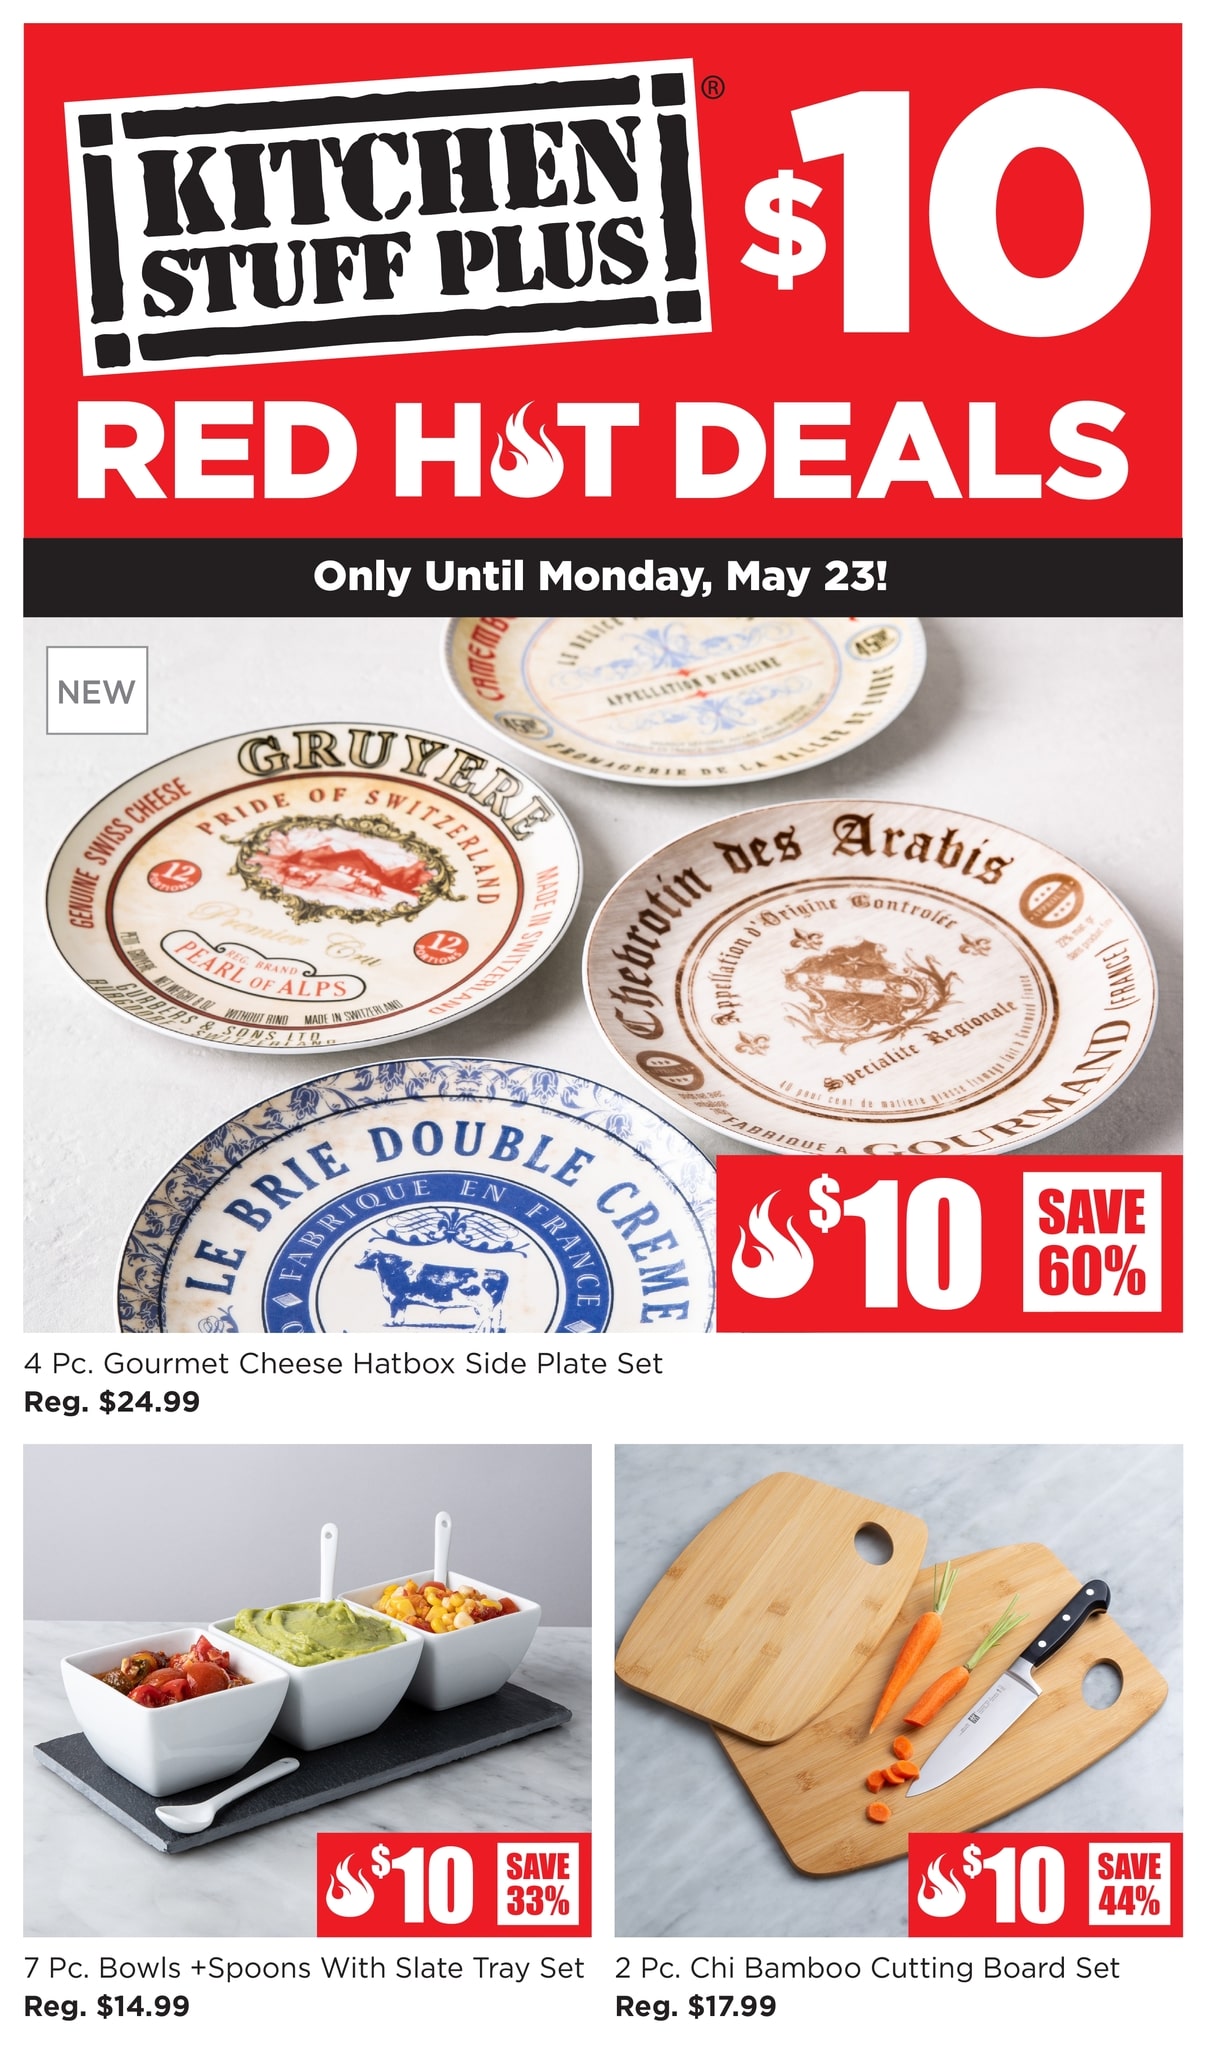 Kitchen Stuff Plus - Red Hot Deals - Weekly Flyer Specials